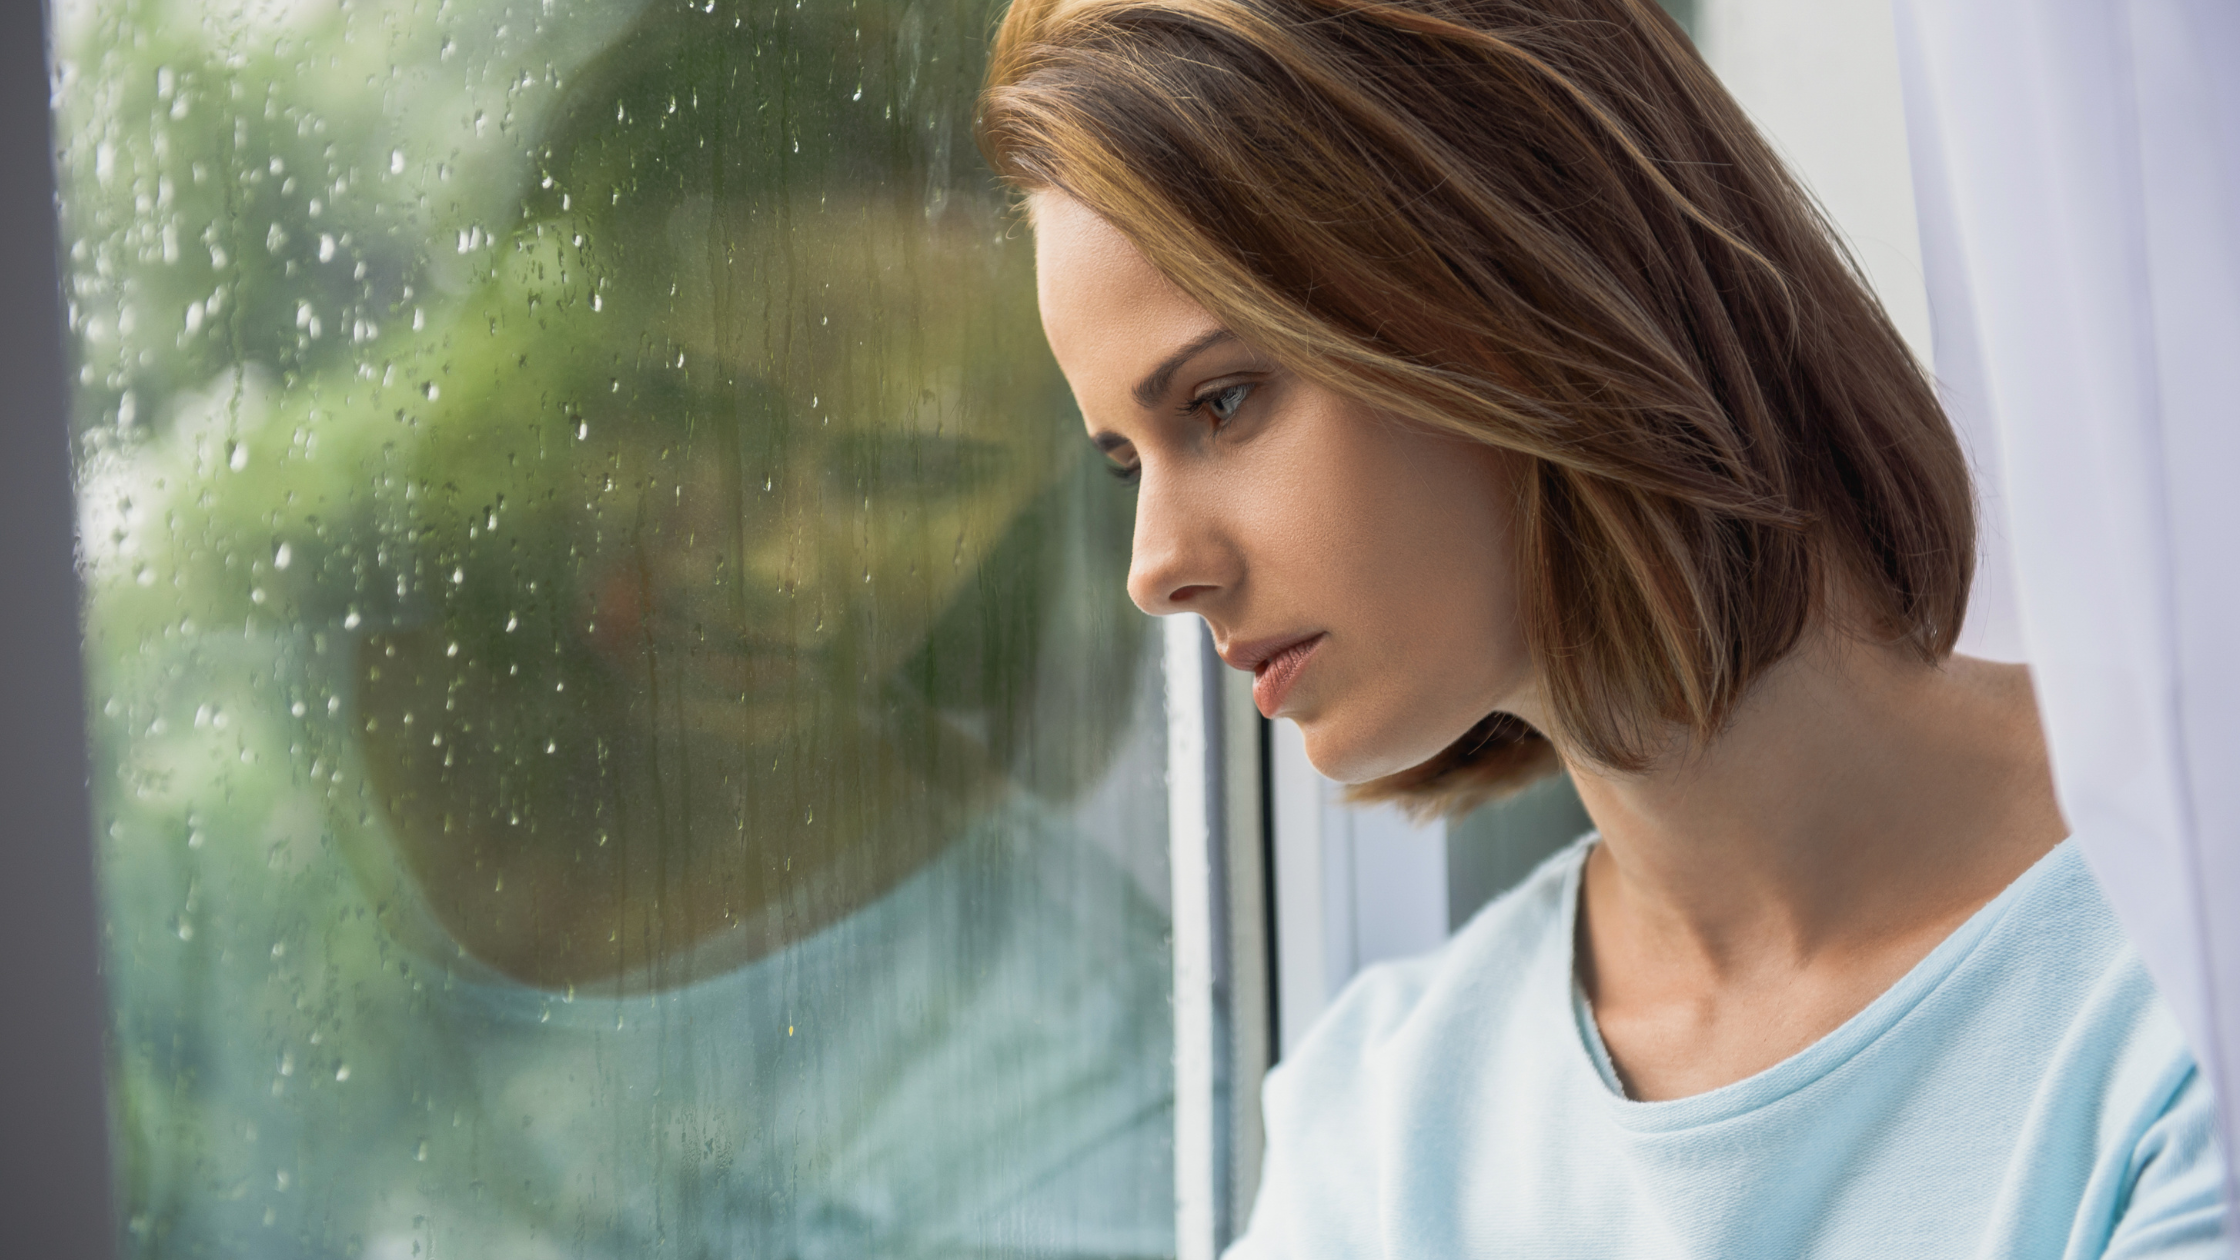 Sad woman gazing out of rainy window